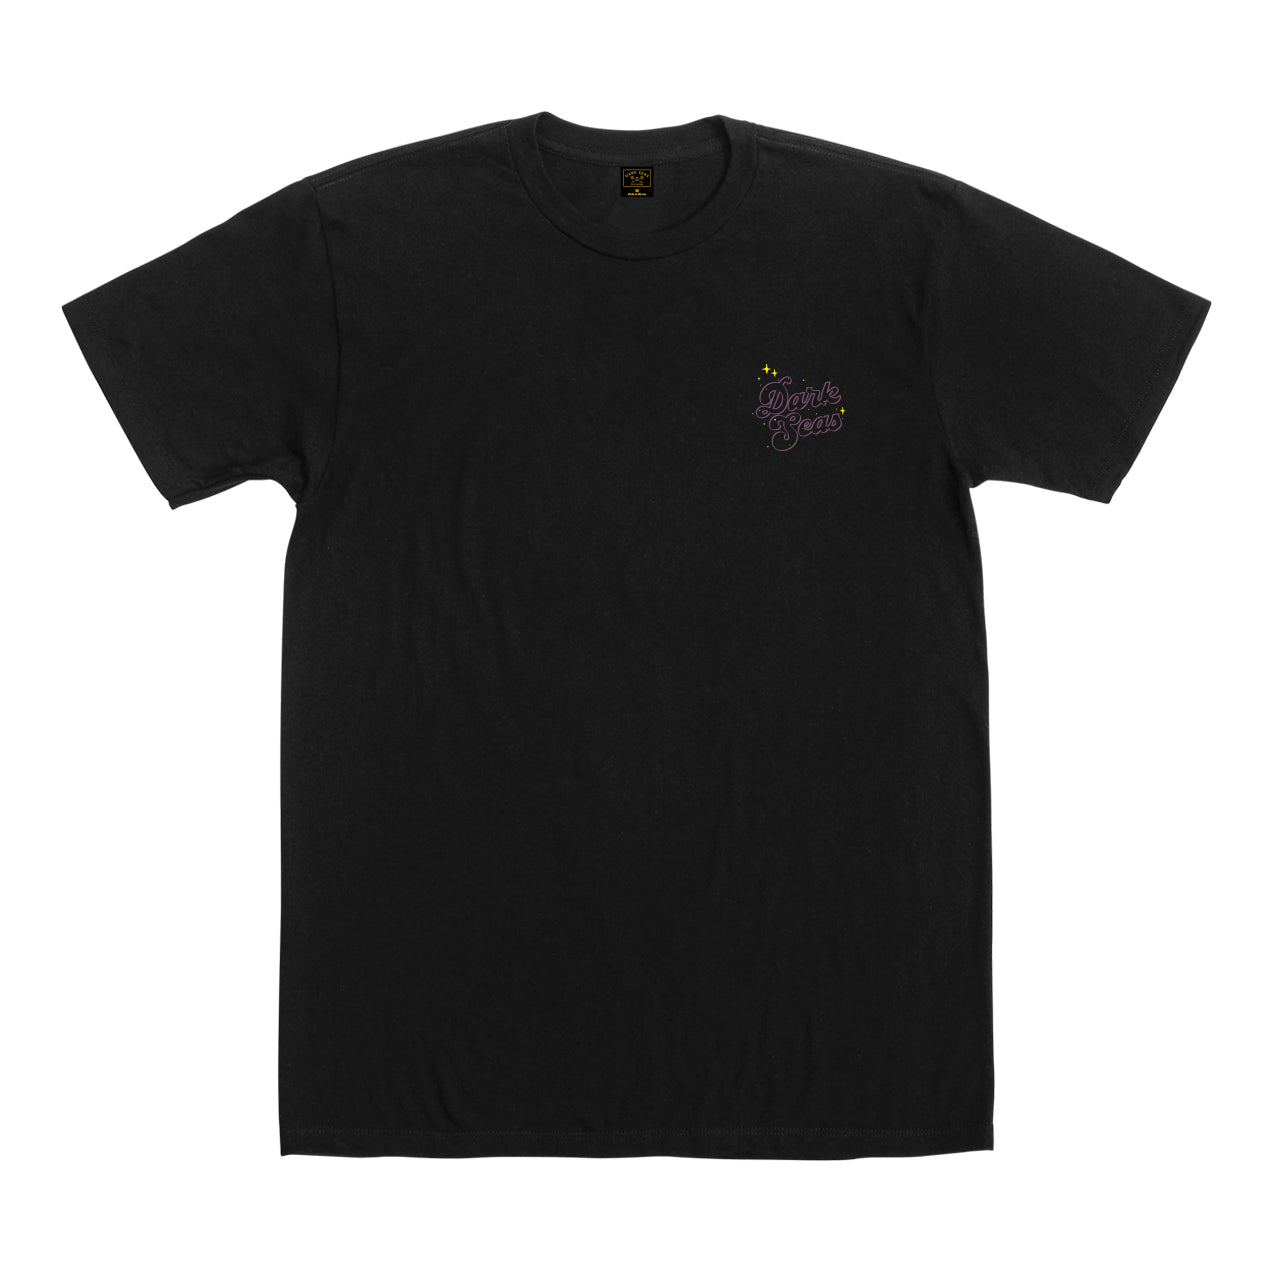 Dark Seas Men's Starlight-Tee Black T-Shirts